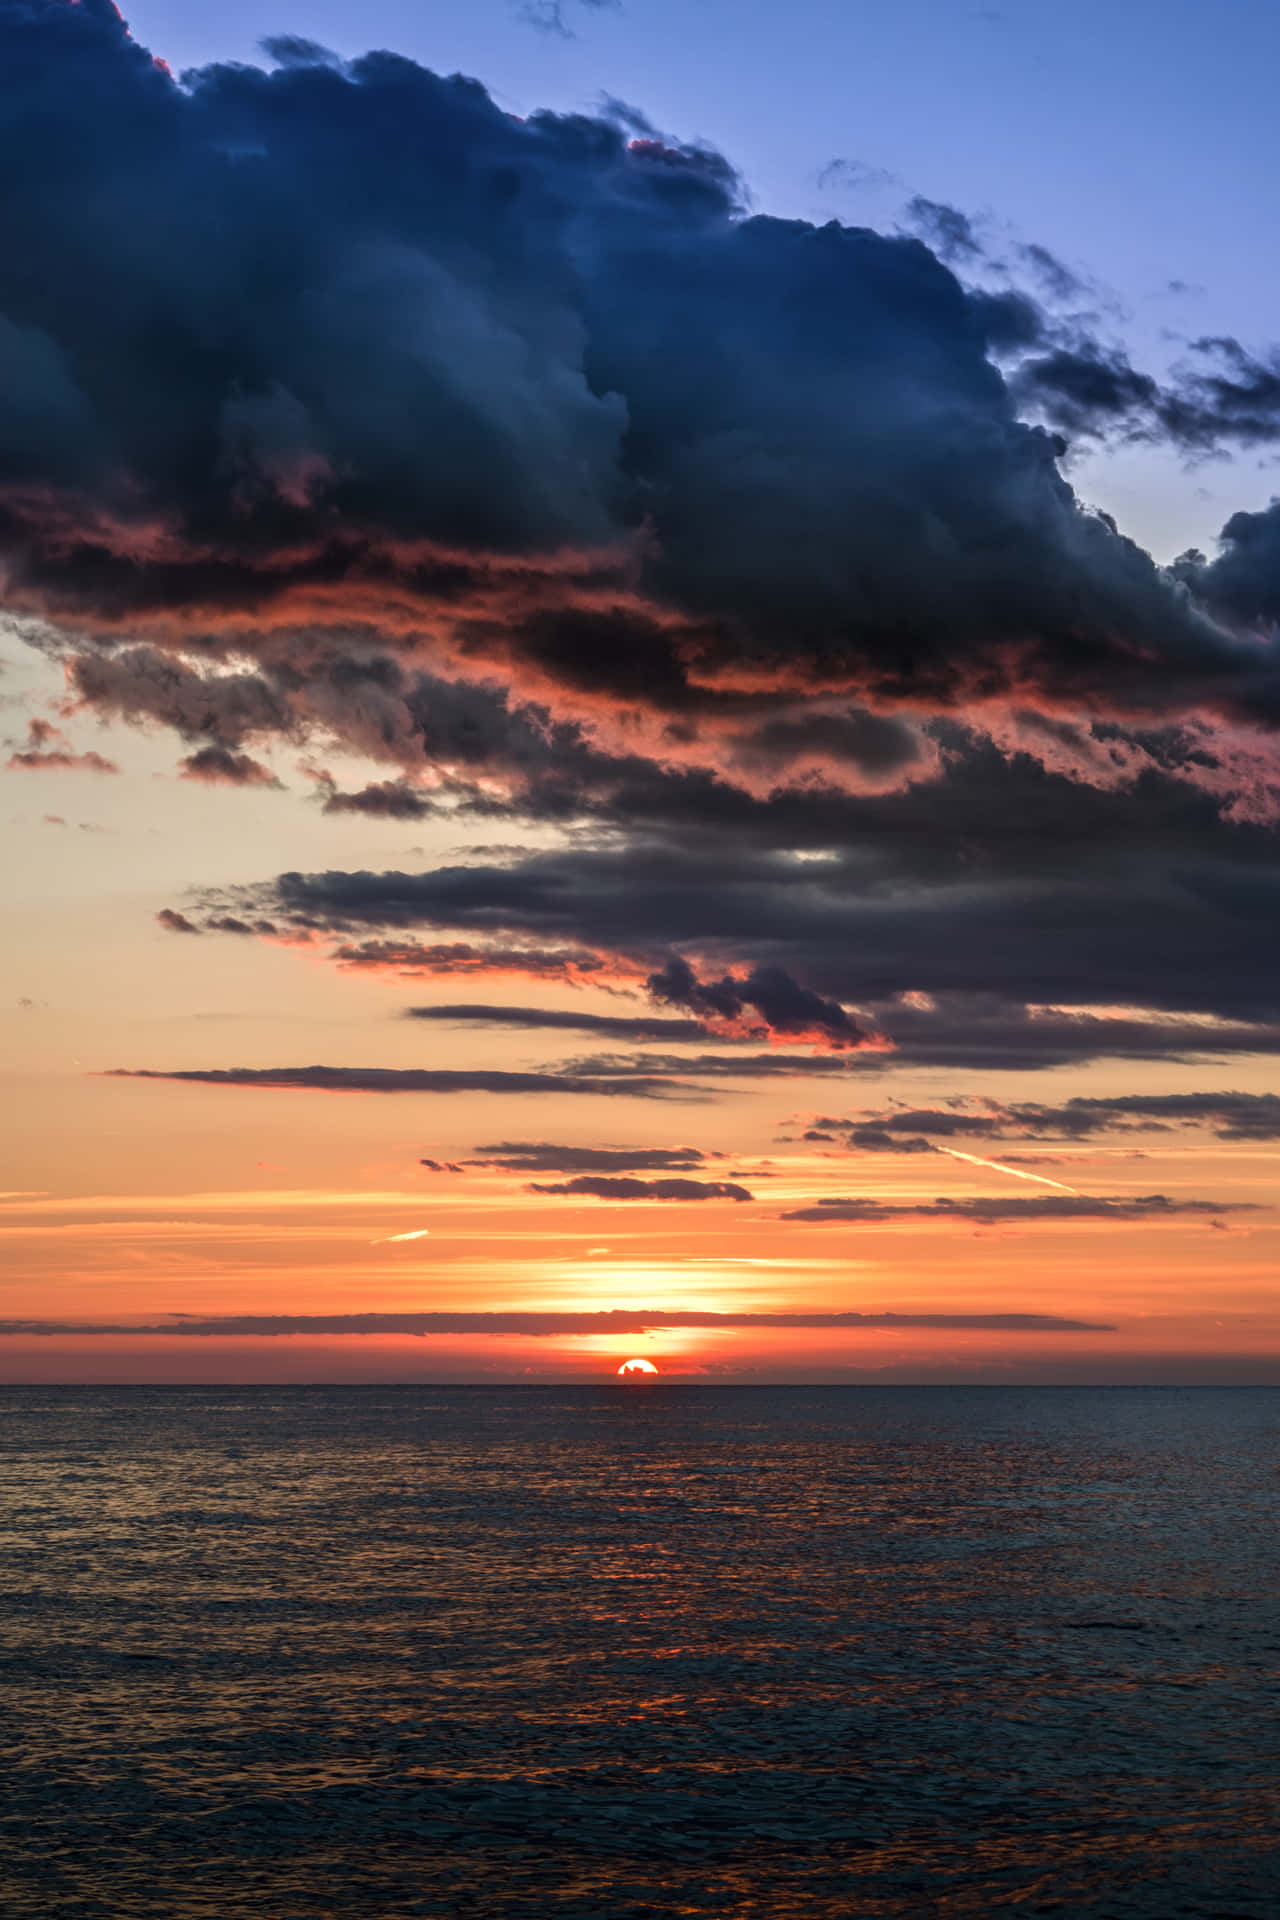 Iphone X Malibu Baggrund Solnedgang ved Havet